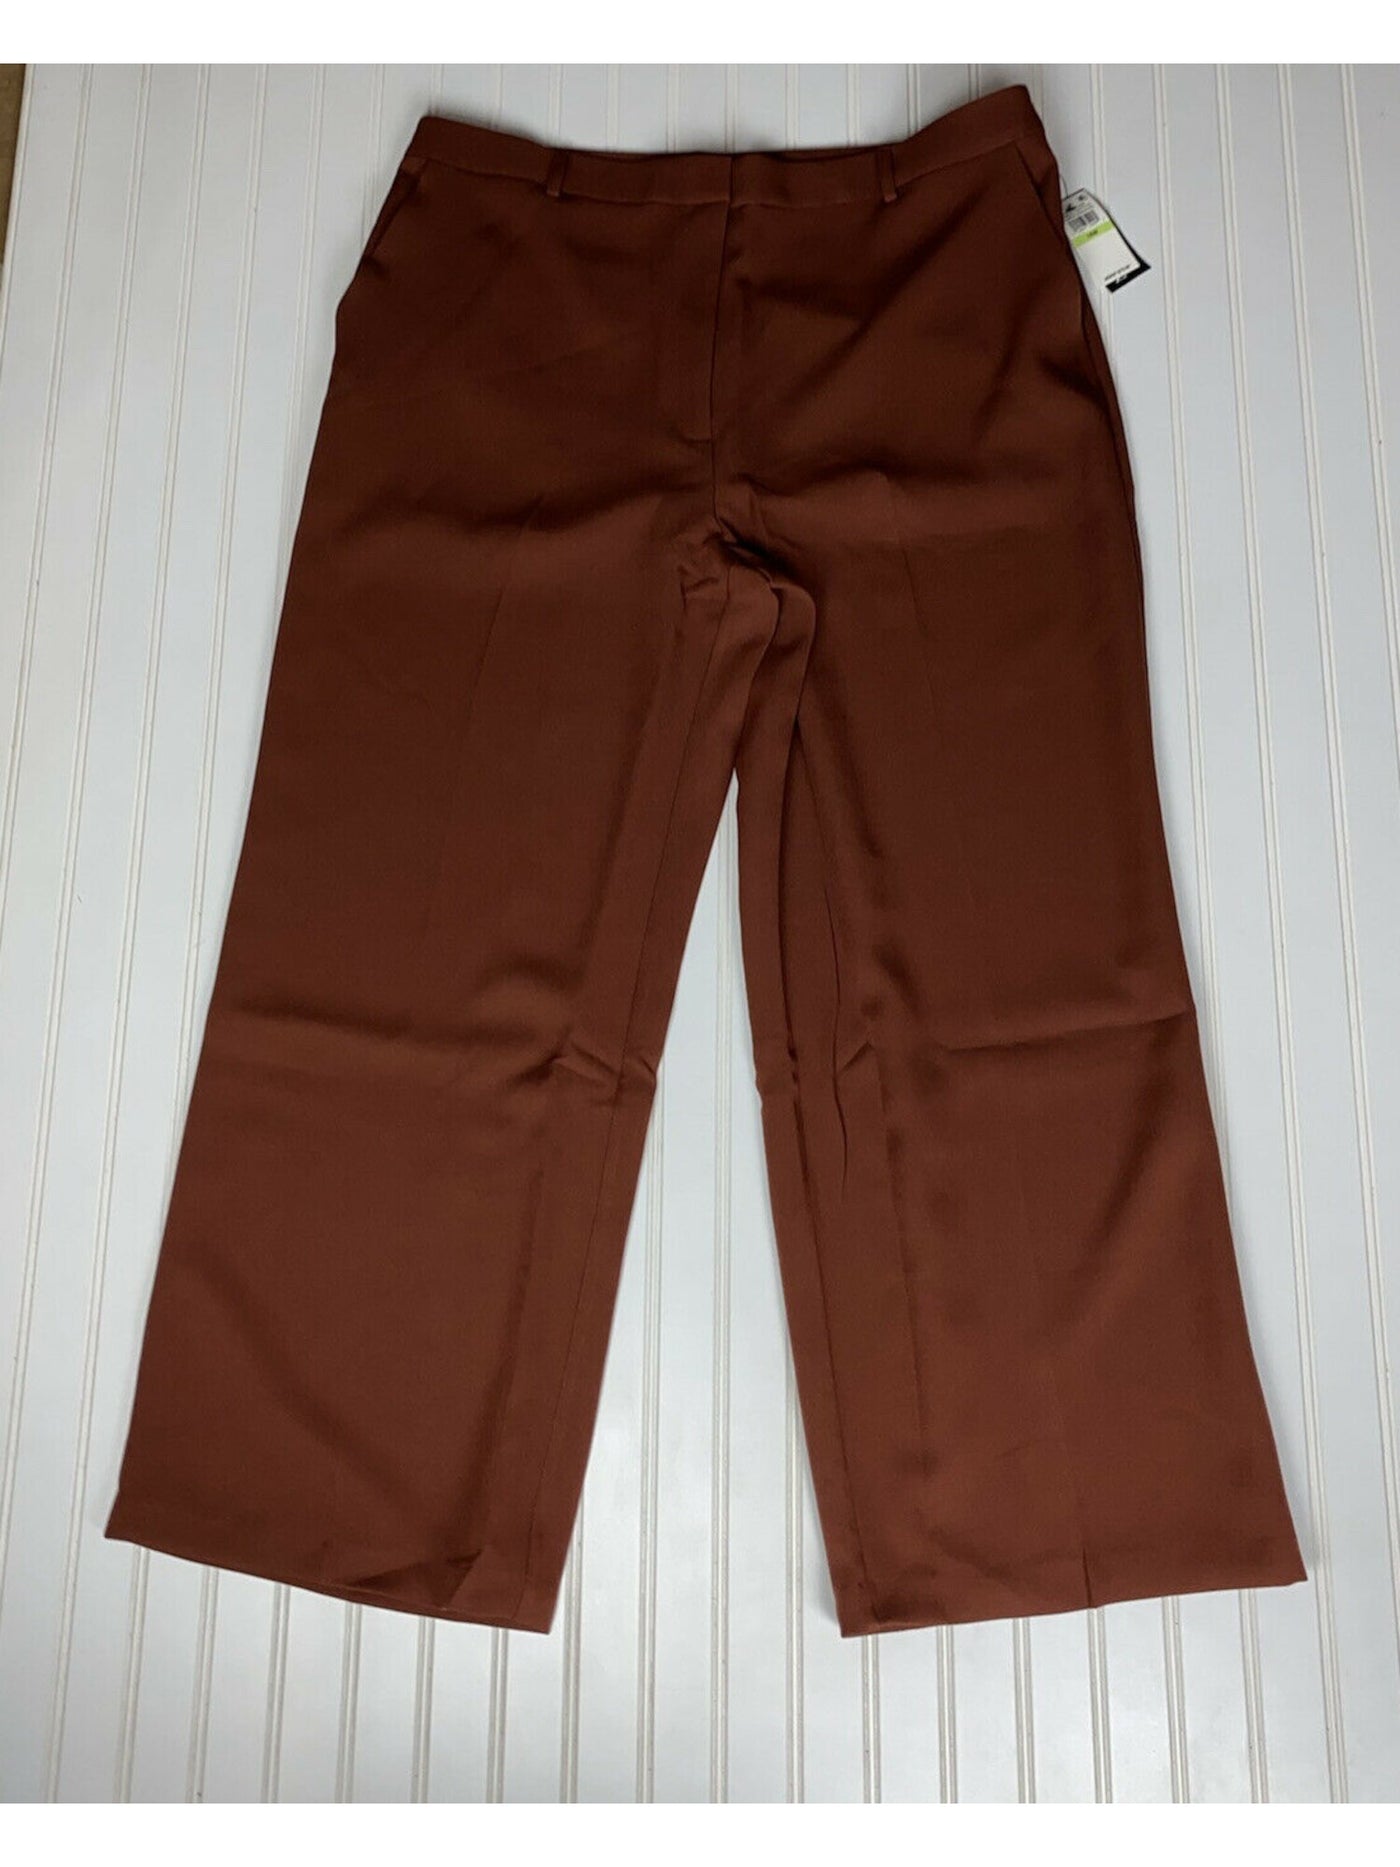 DANIELLE BERNSTEIN Womens Brown Pocketed Zippered Wear To Work Straight leg Pants 6